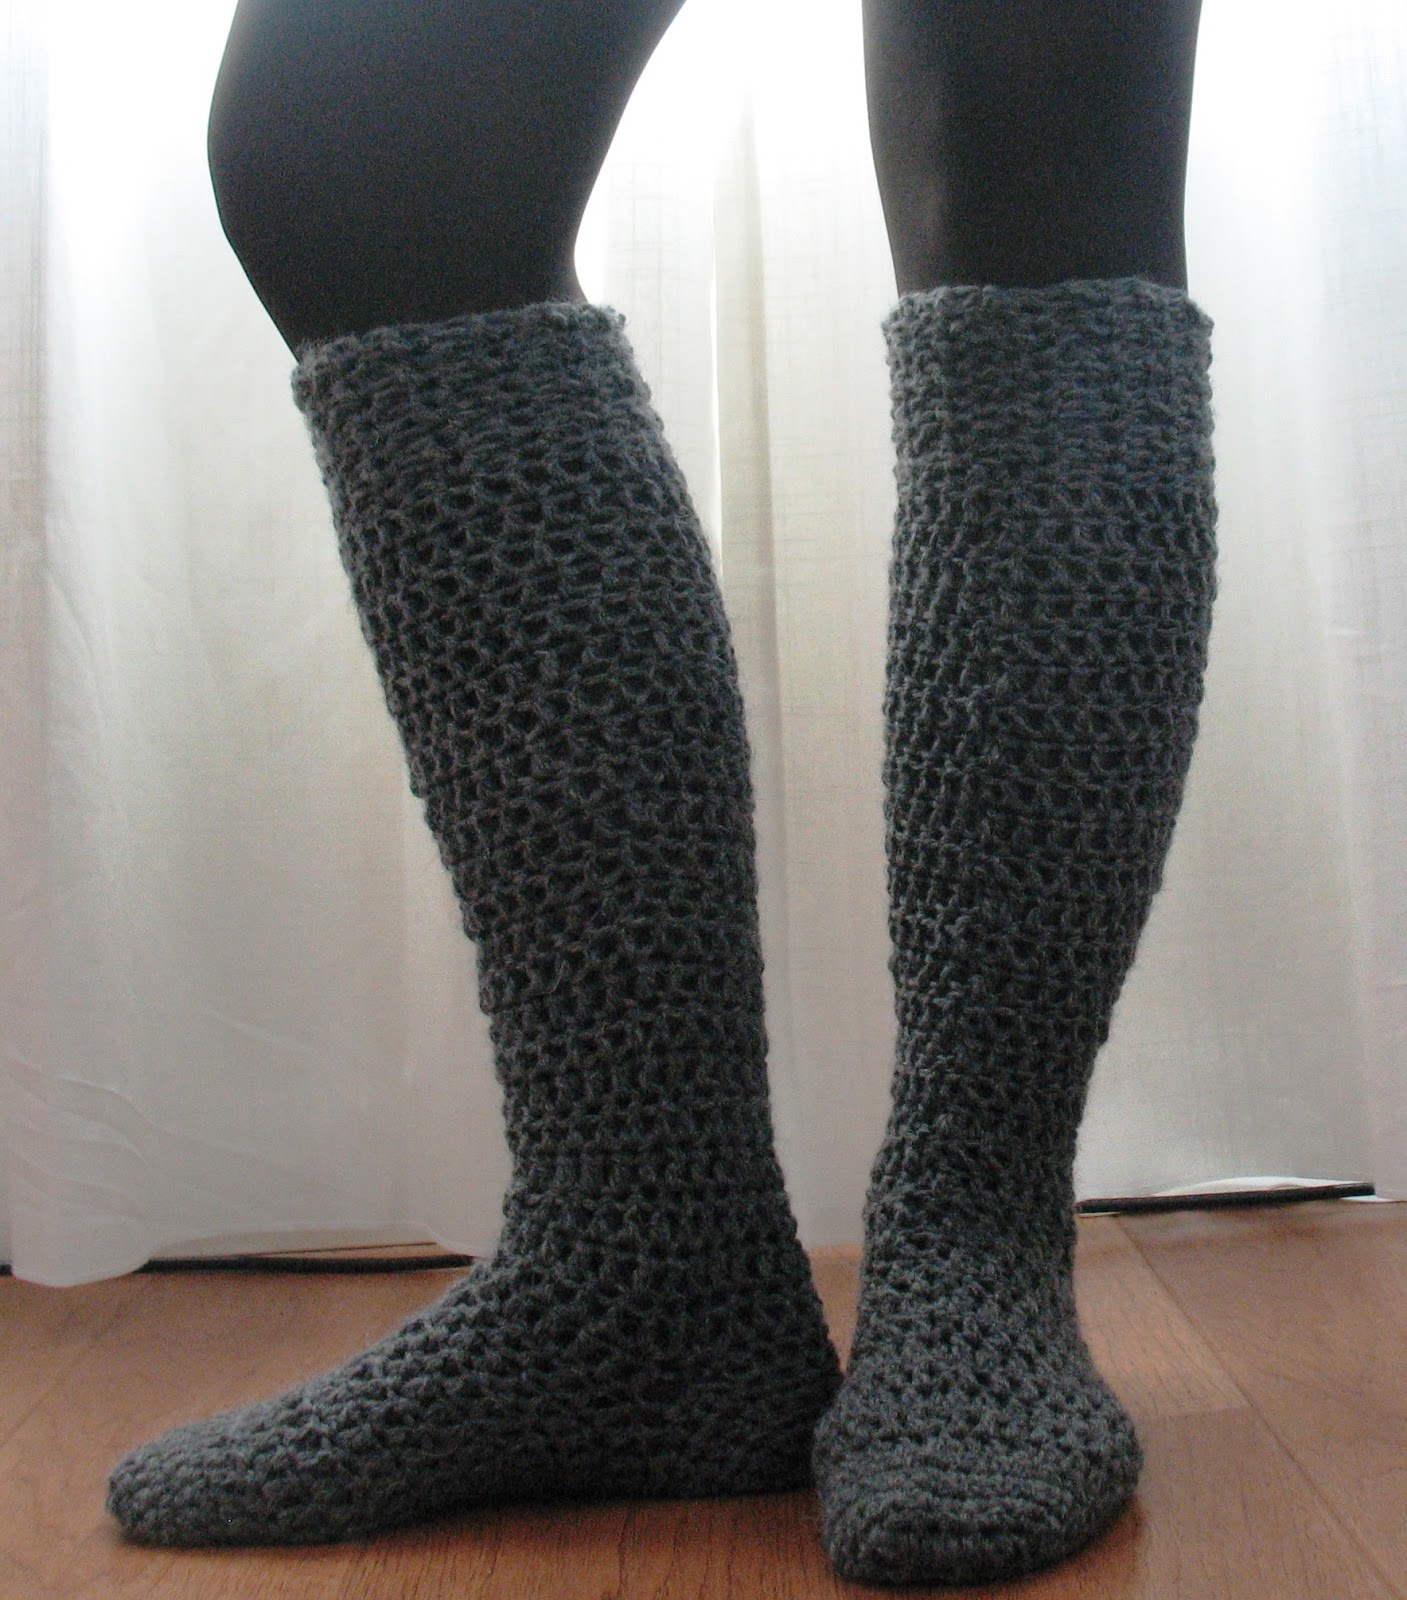 Swell Leg Warmers Free Crochet Pattern - Gleeful Things